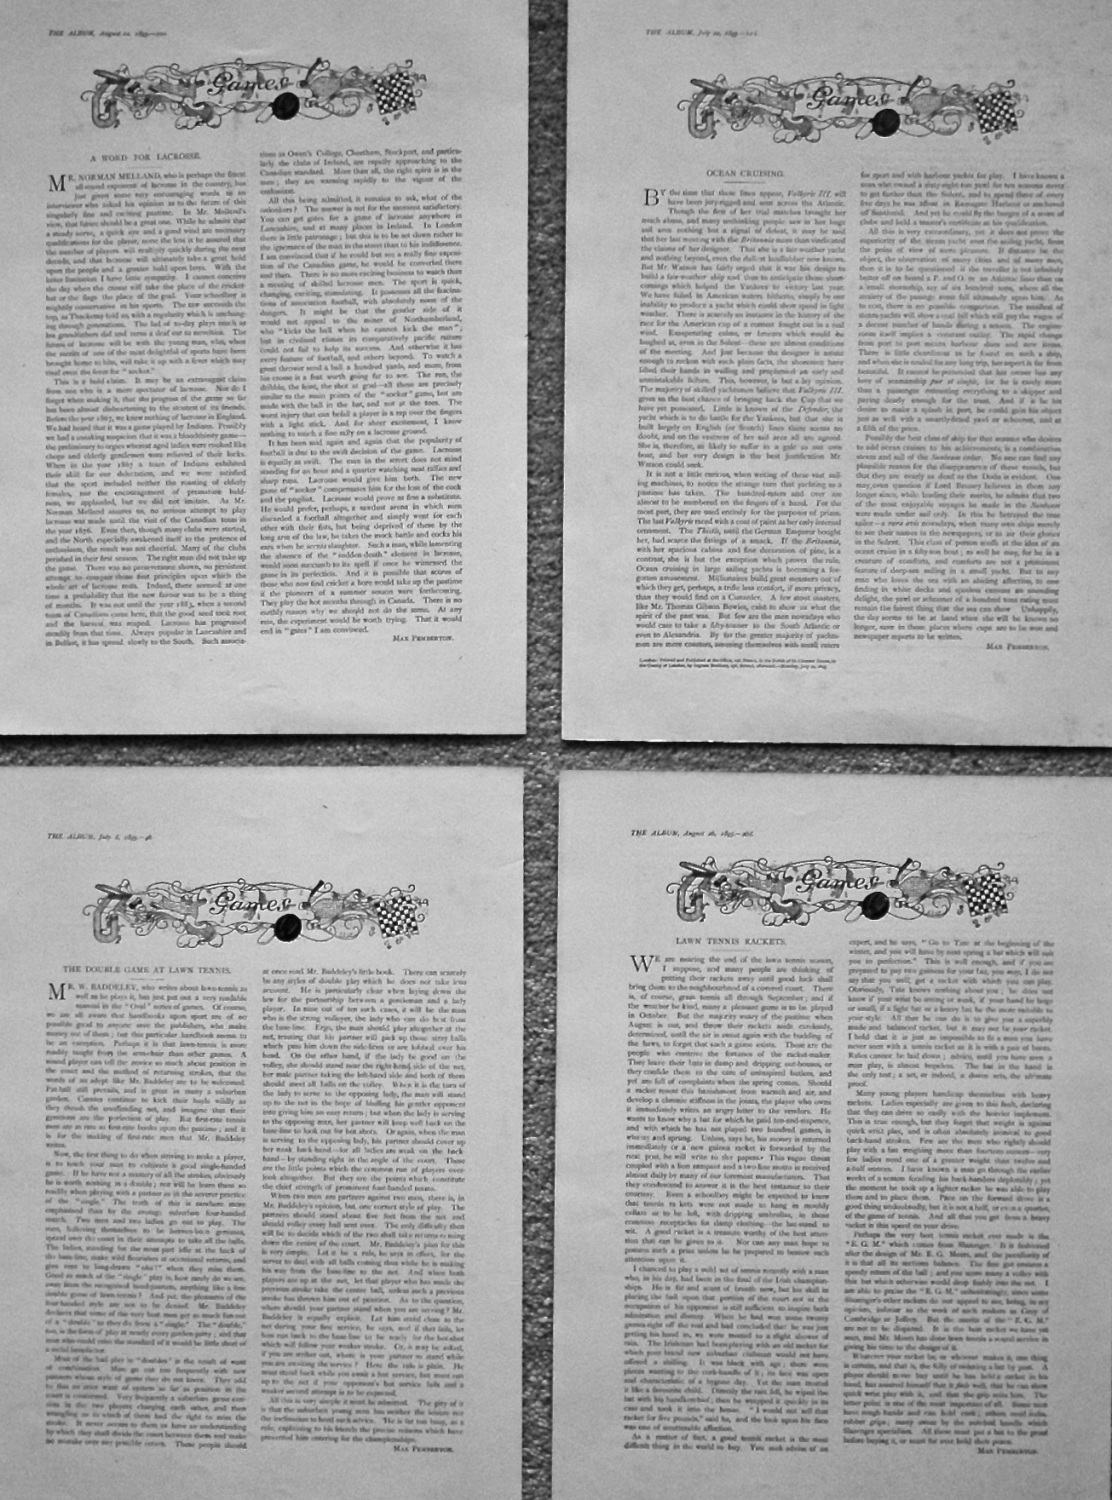 Games. (Articles written by Max Pemberton.) 1895.